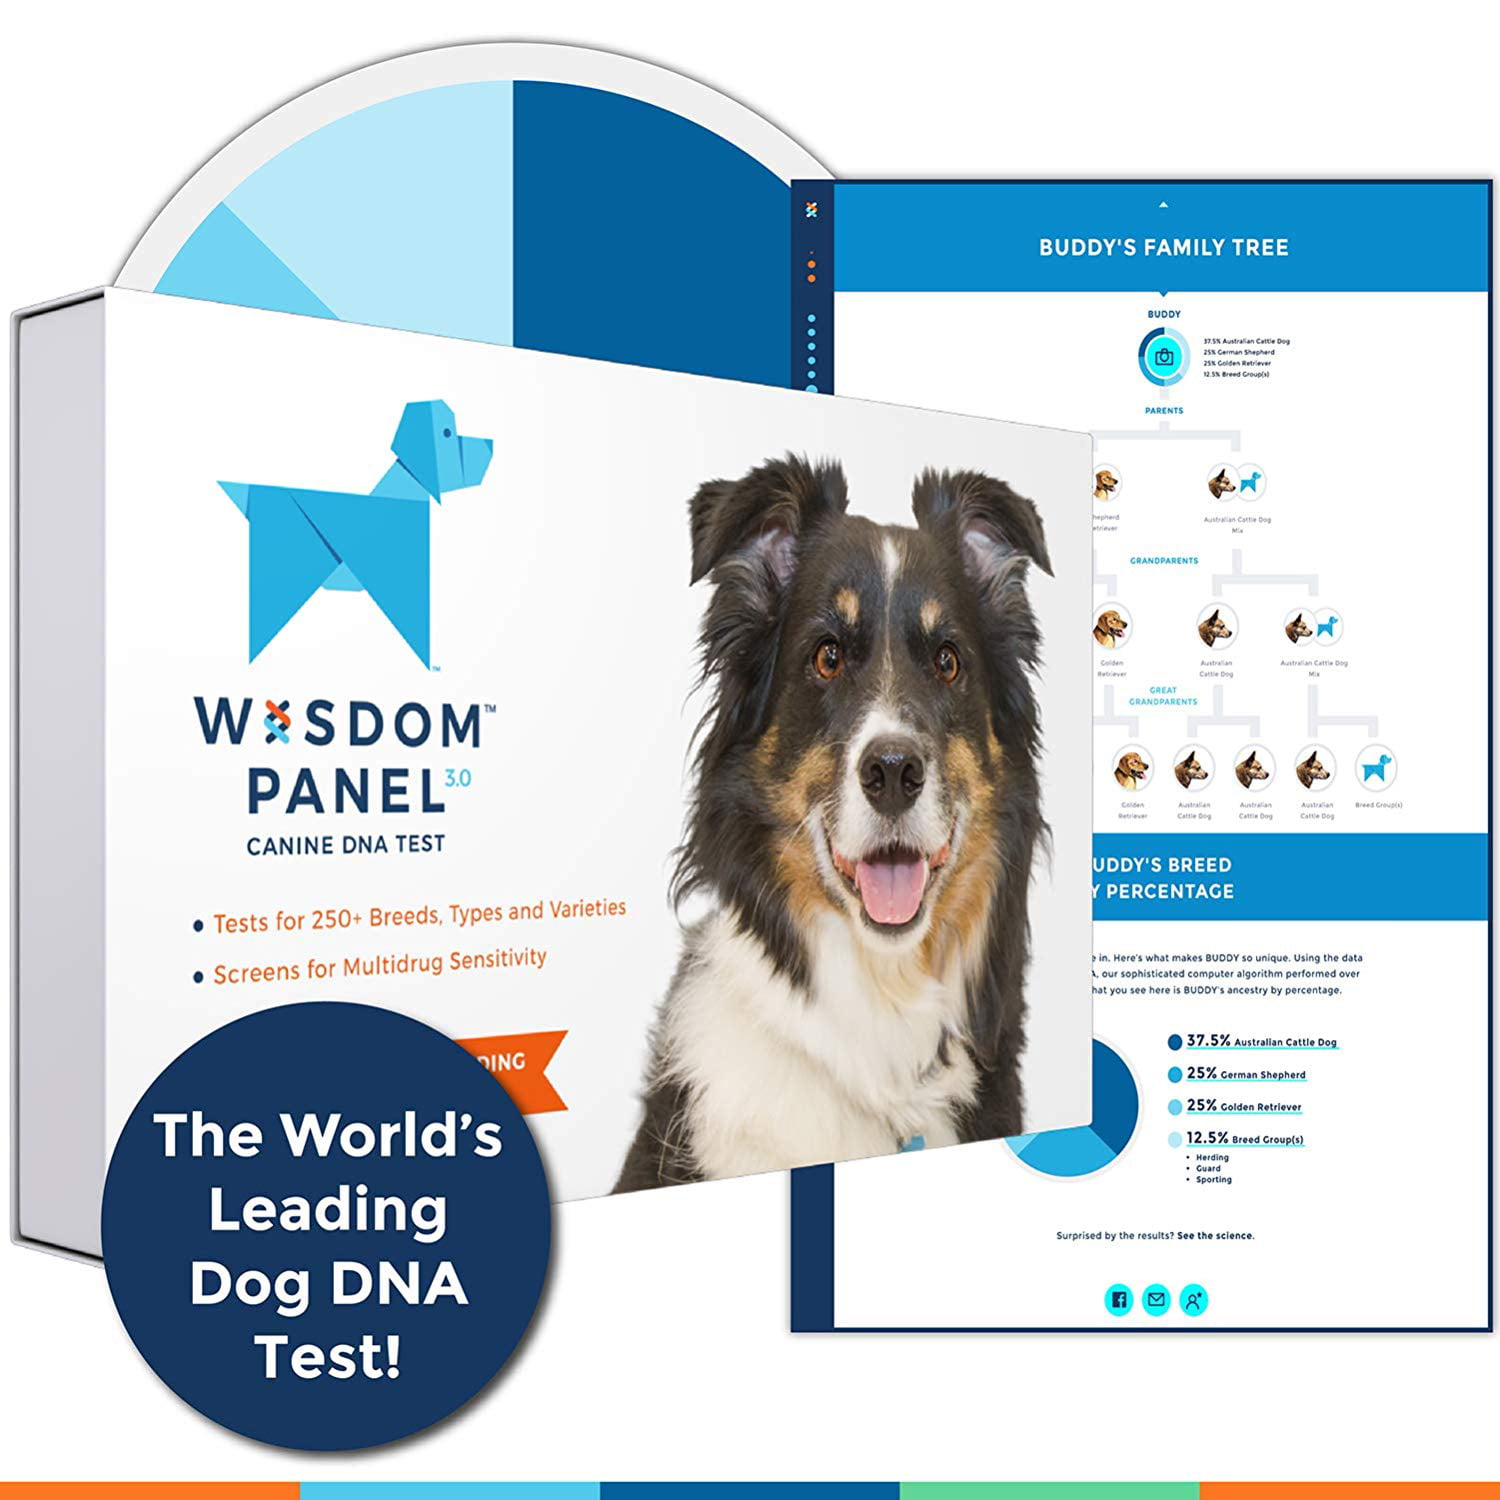 dog dna tests compared